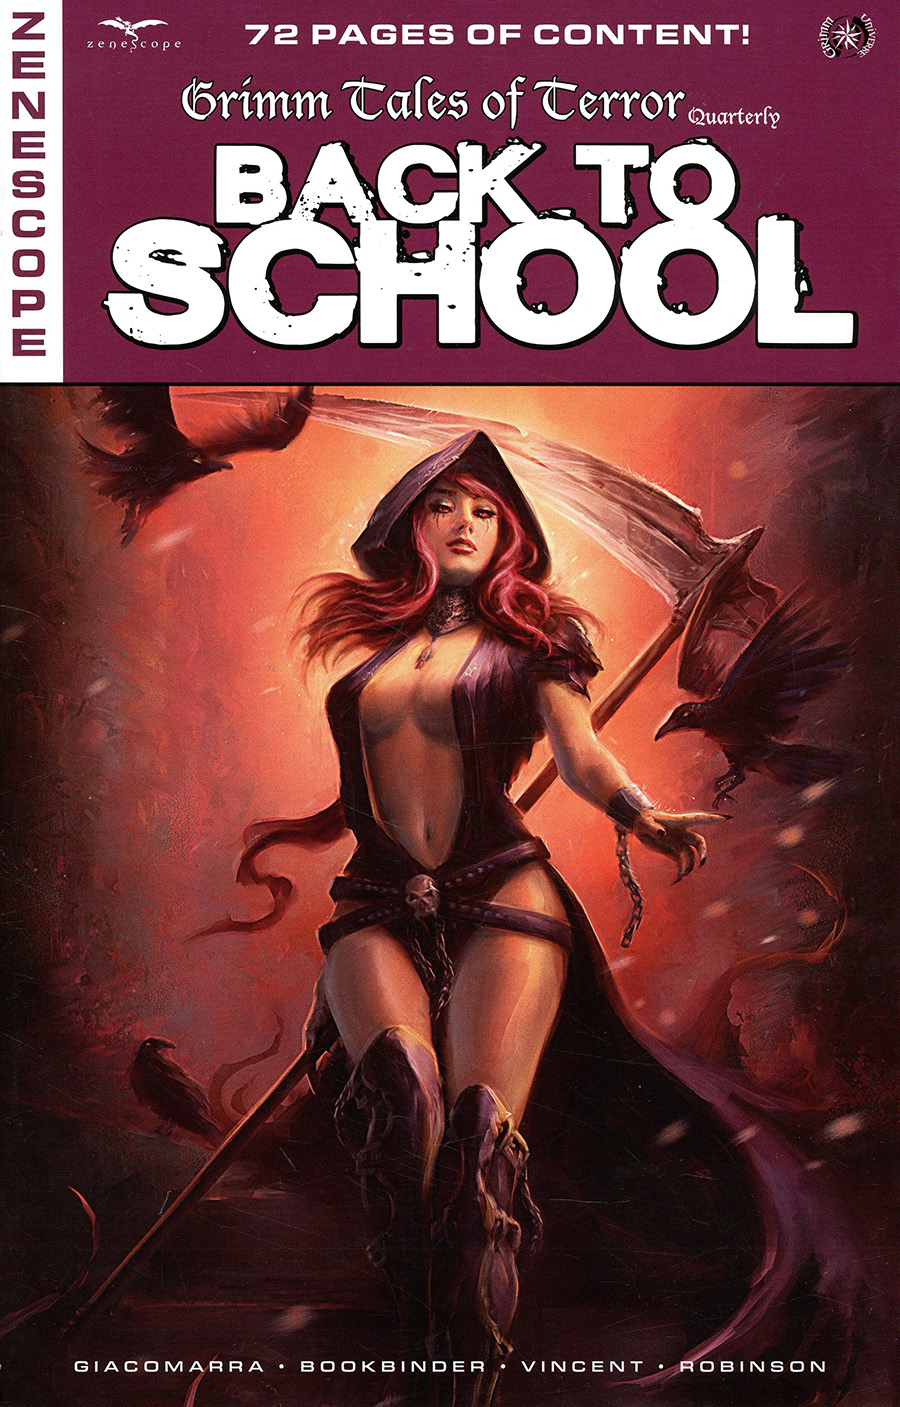 Grimm Fairy Tales Presents Grimm Tales Of Terror Quarterly #6 Back To School Cover C Pierluigi Abbondanza